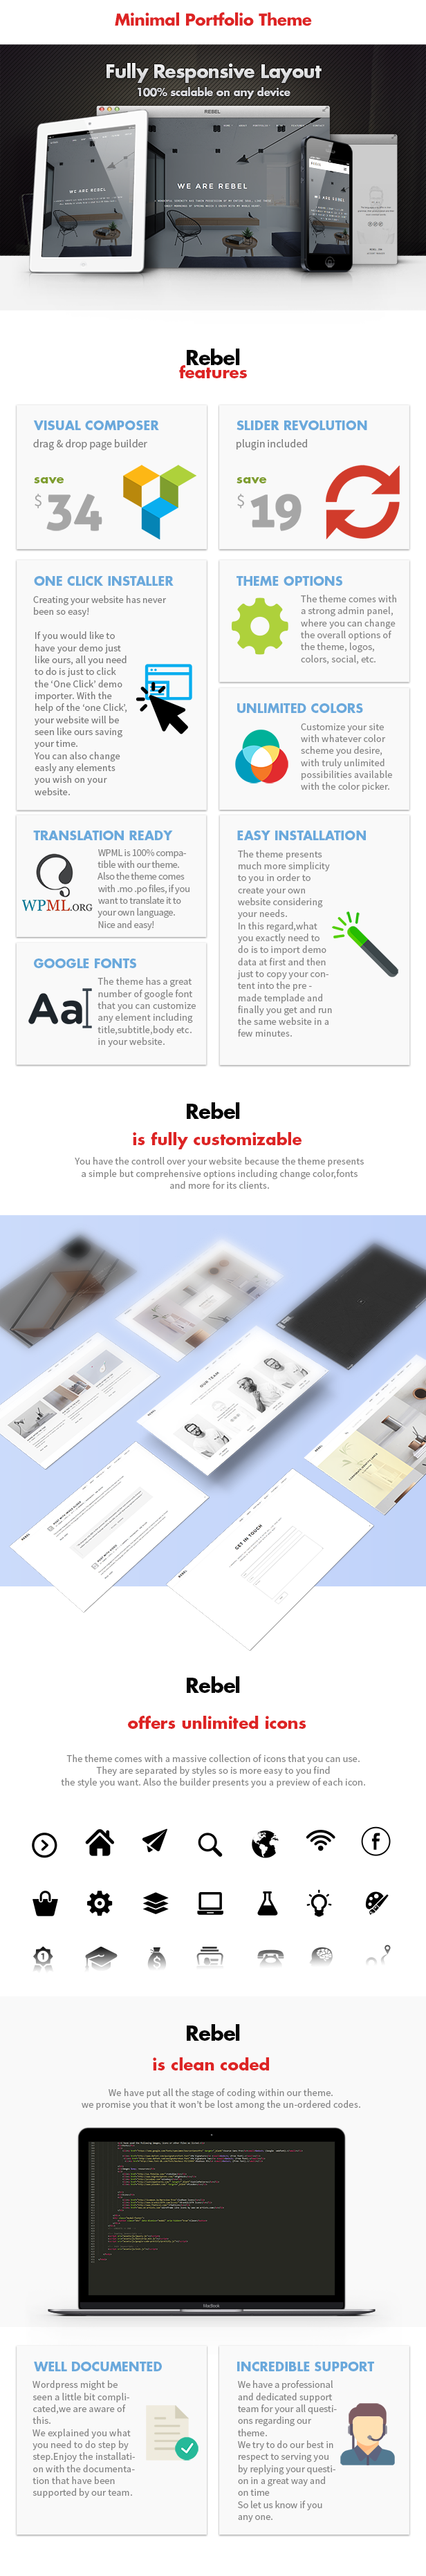 Rebel - Minimal Portfolio Theme - 3